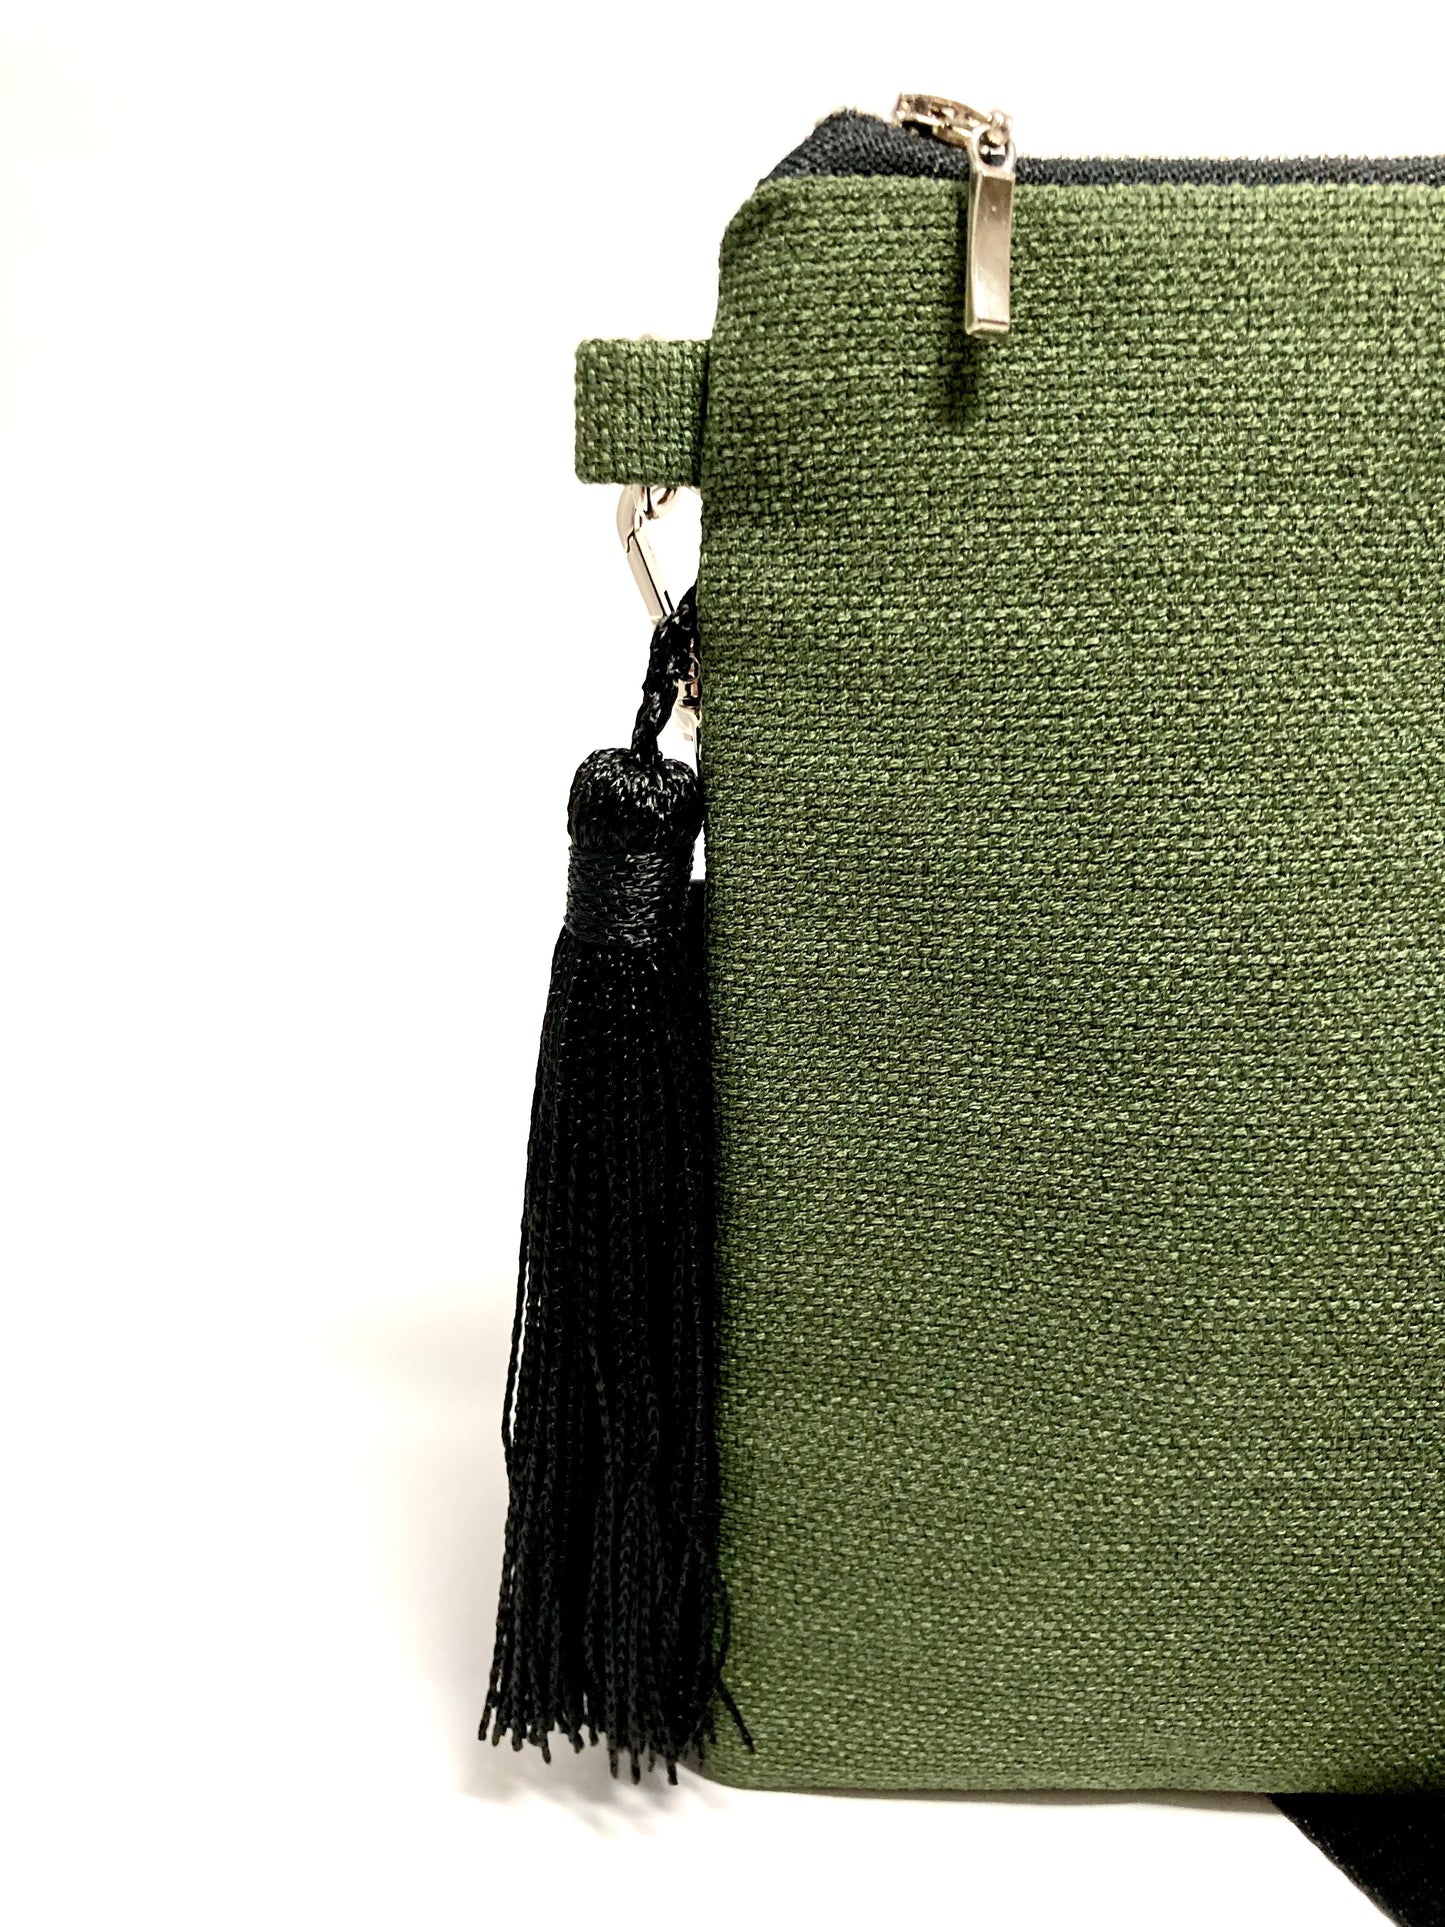 Green crossbody bag with tassel